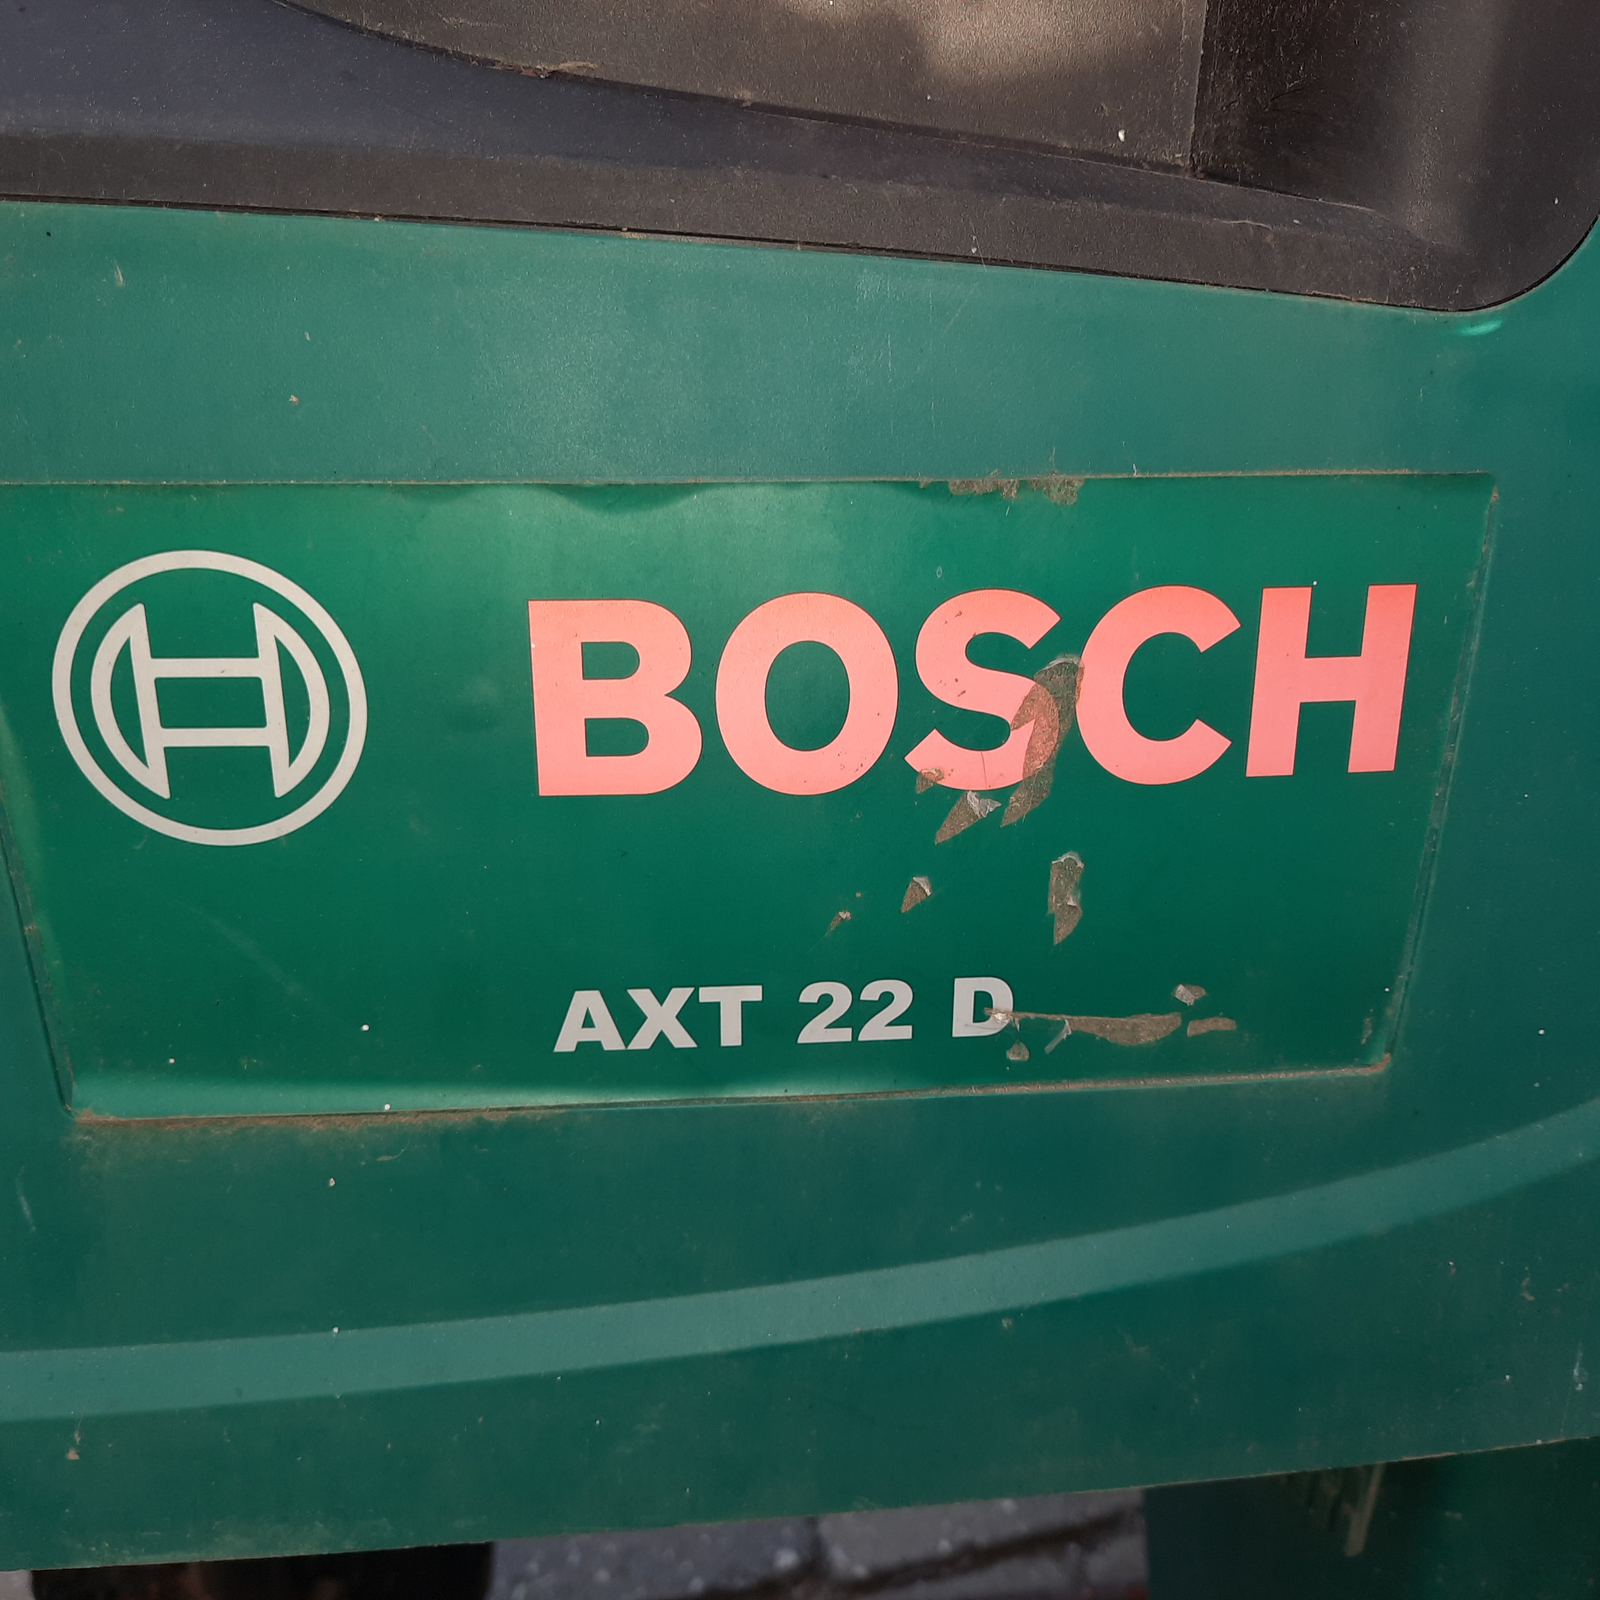 Kompostkværn, Bosch